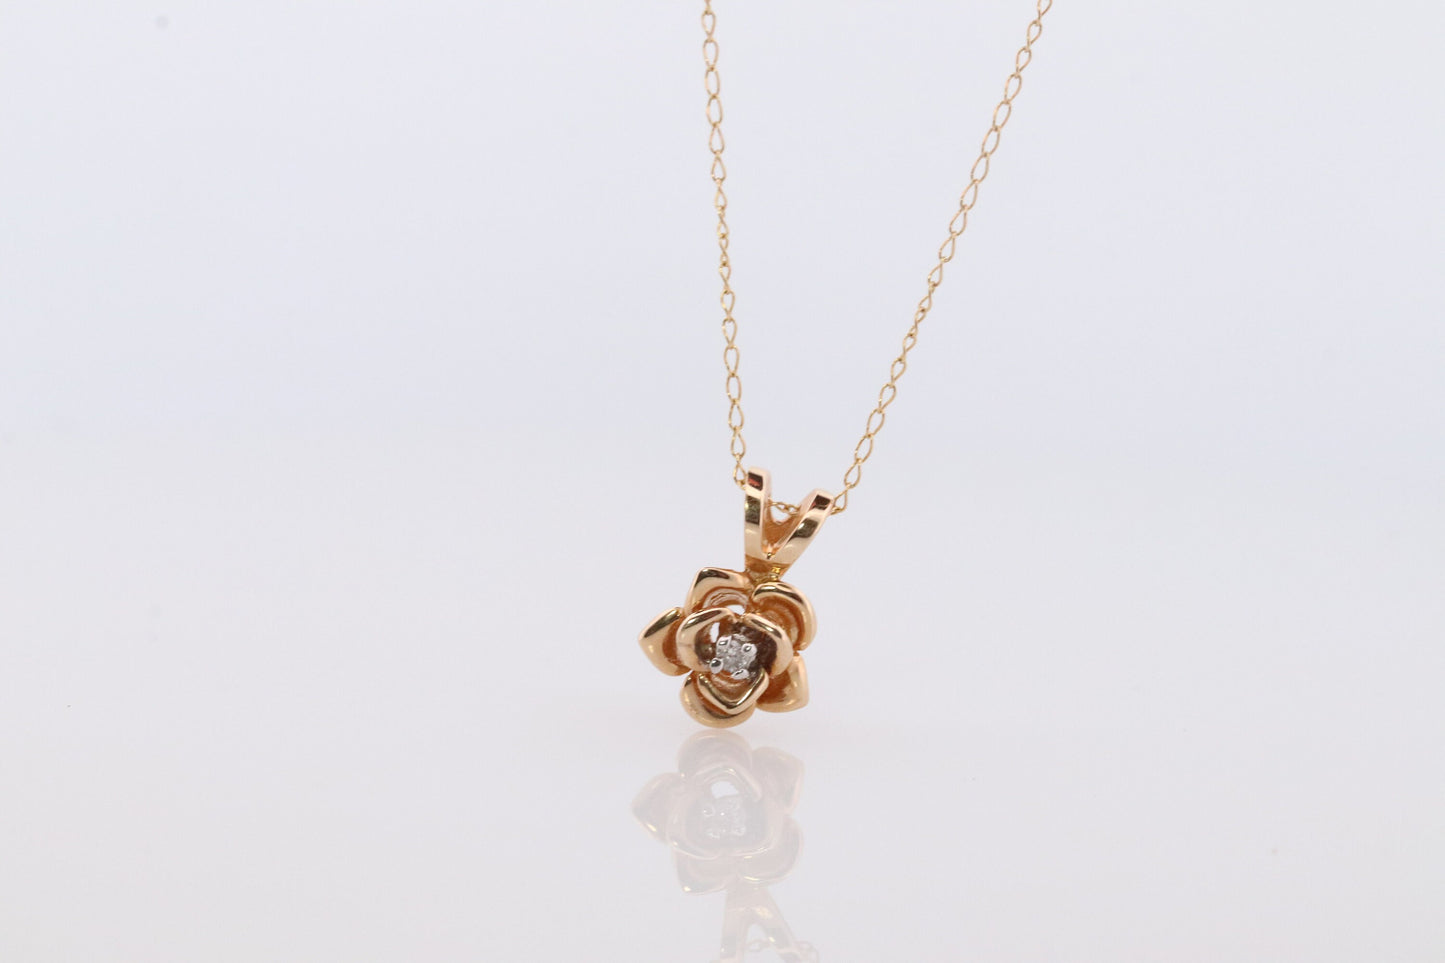 14k Diamond Rose Flower Pendant. 14k Diamond Daisy Rose flower pendant and necklace. Dainty diamond solitaire pendant